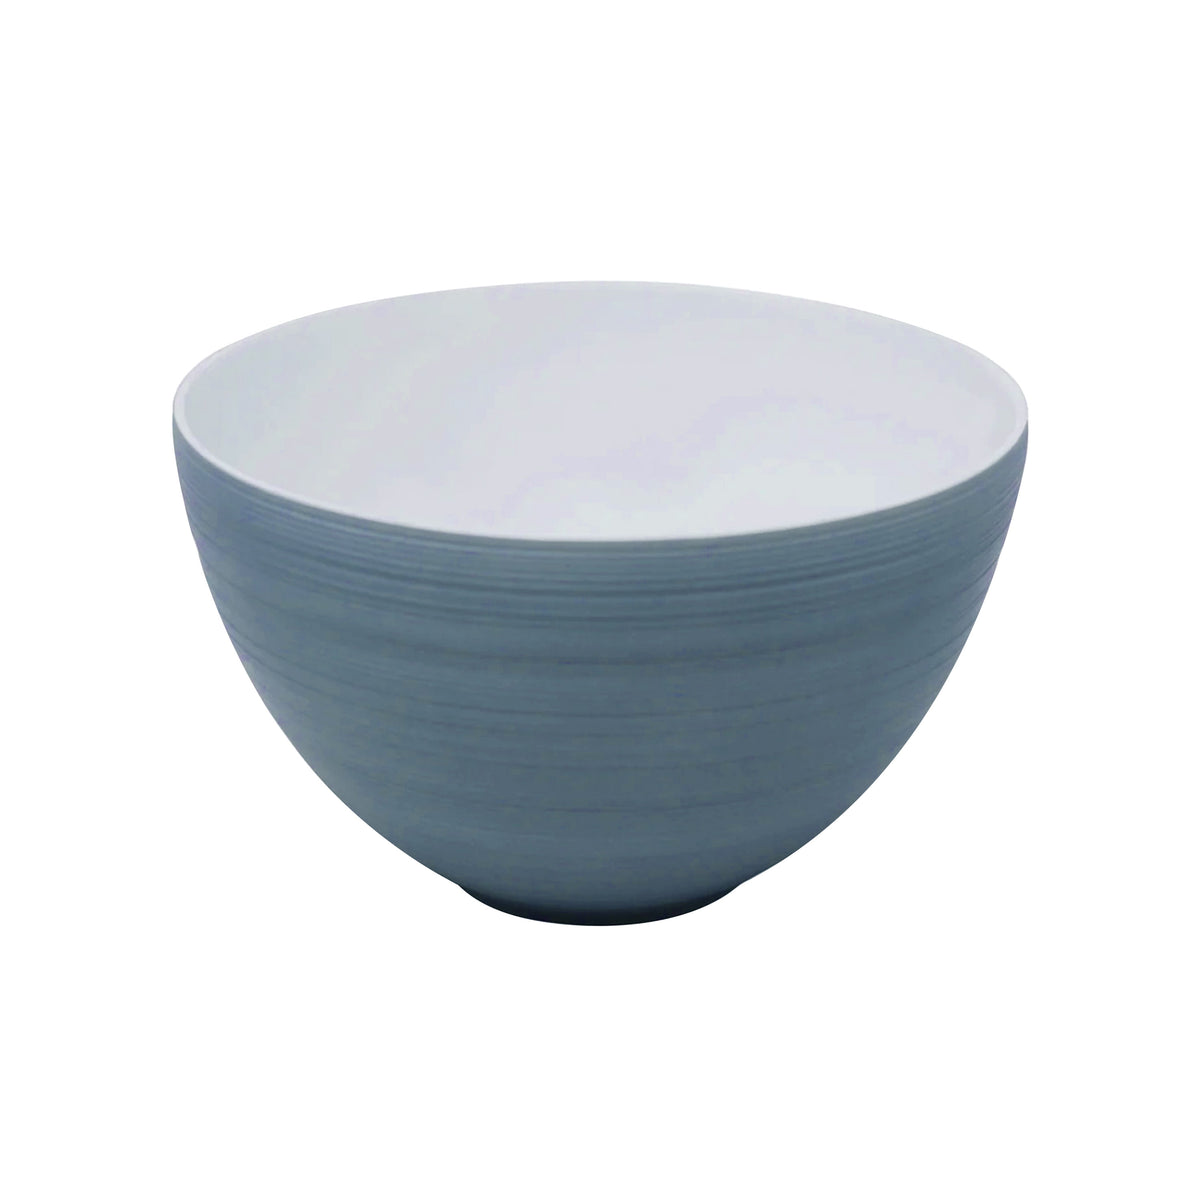 HEMISPHERE Storm Blue - Salad serving bowl, maxi